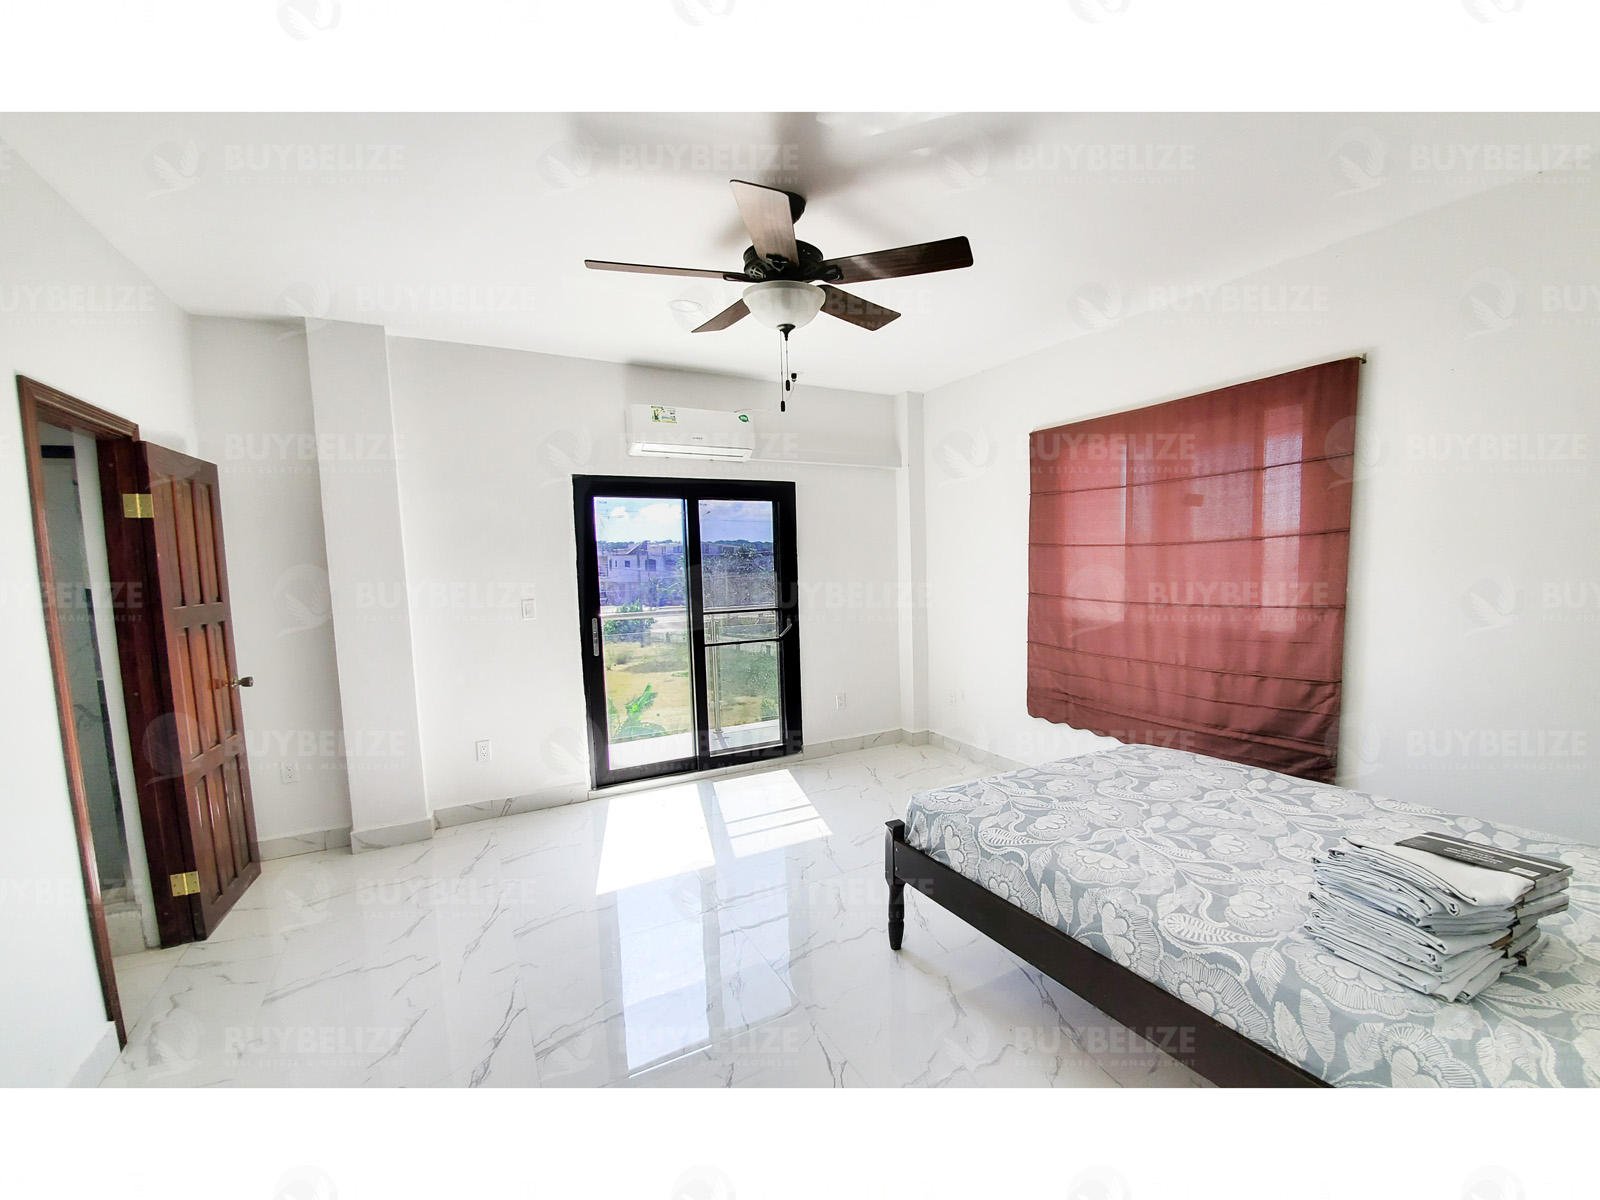 Modern 3 bedroom 2.5 bathroom apartment for Rent in Belize City